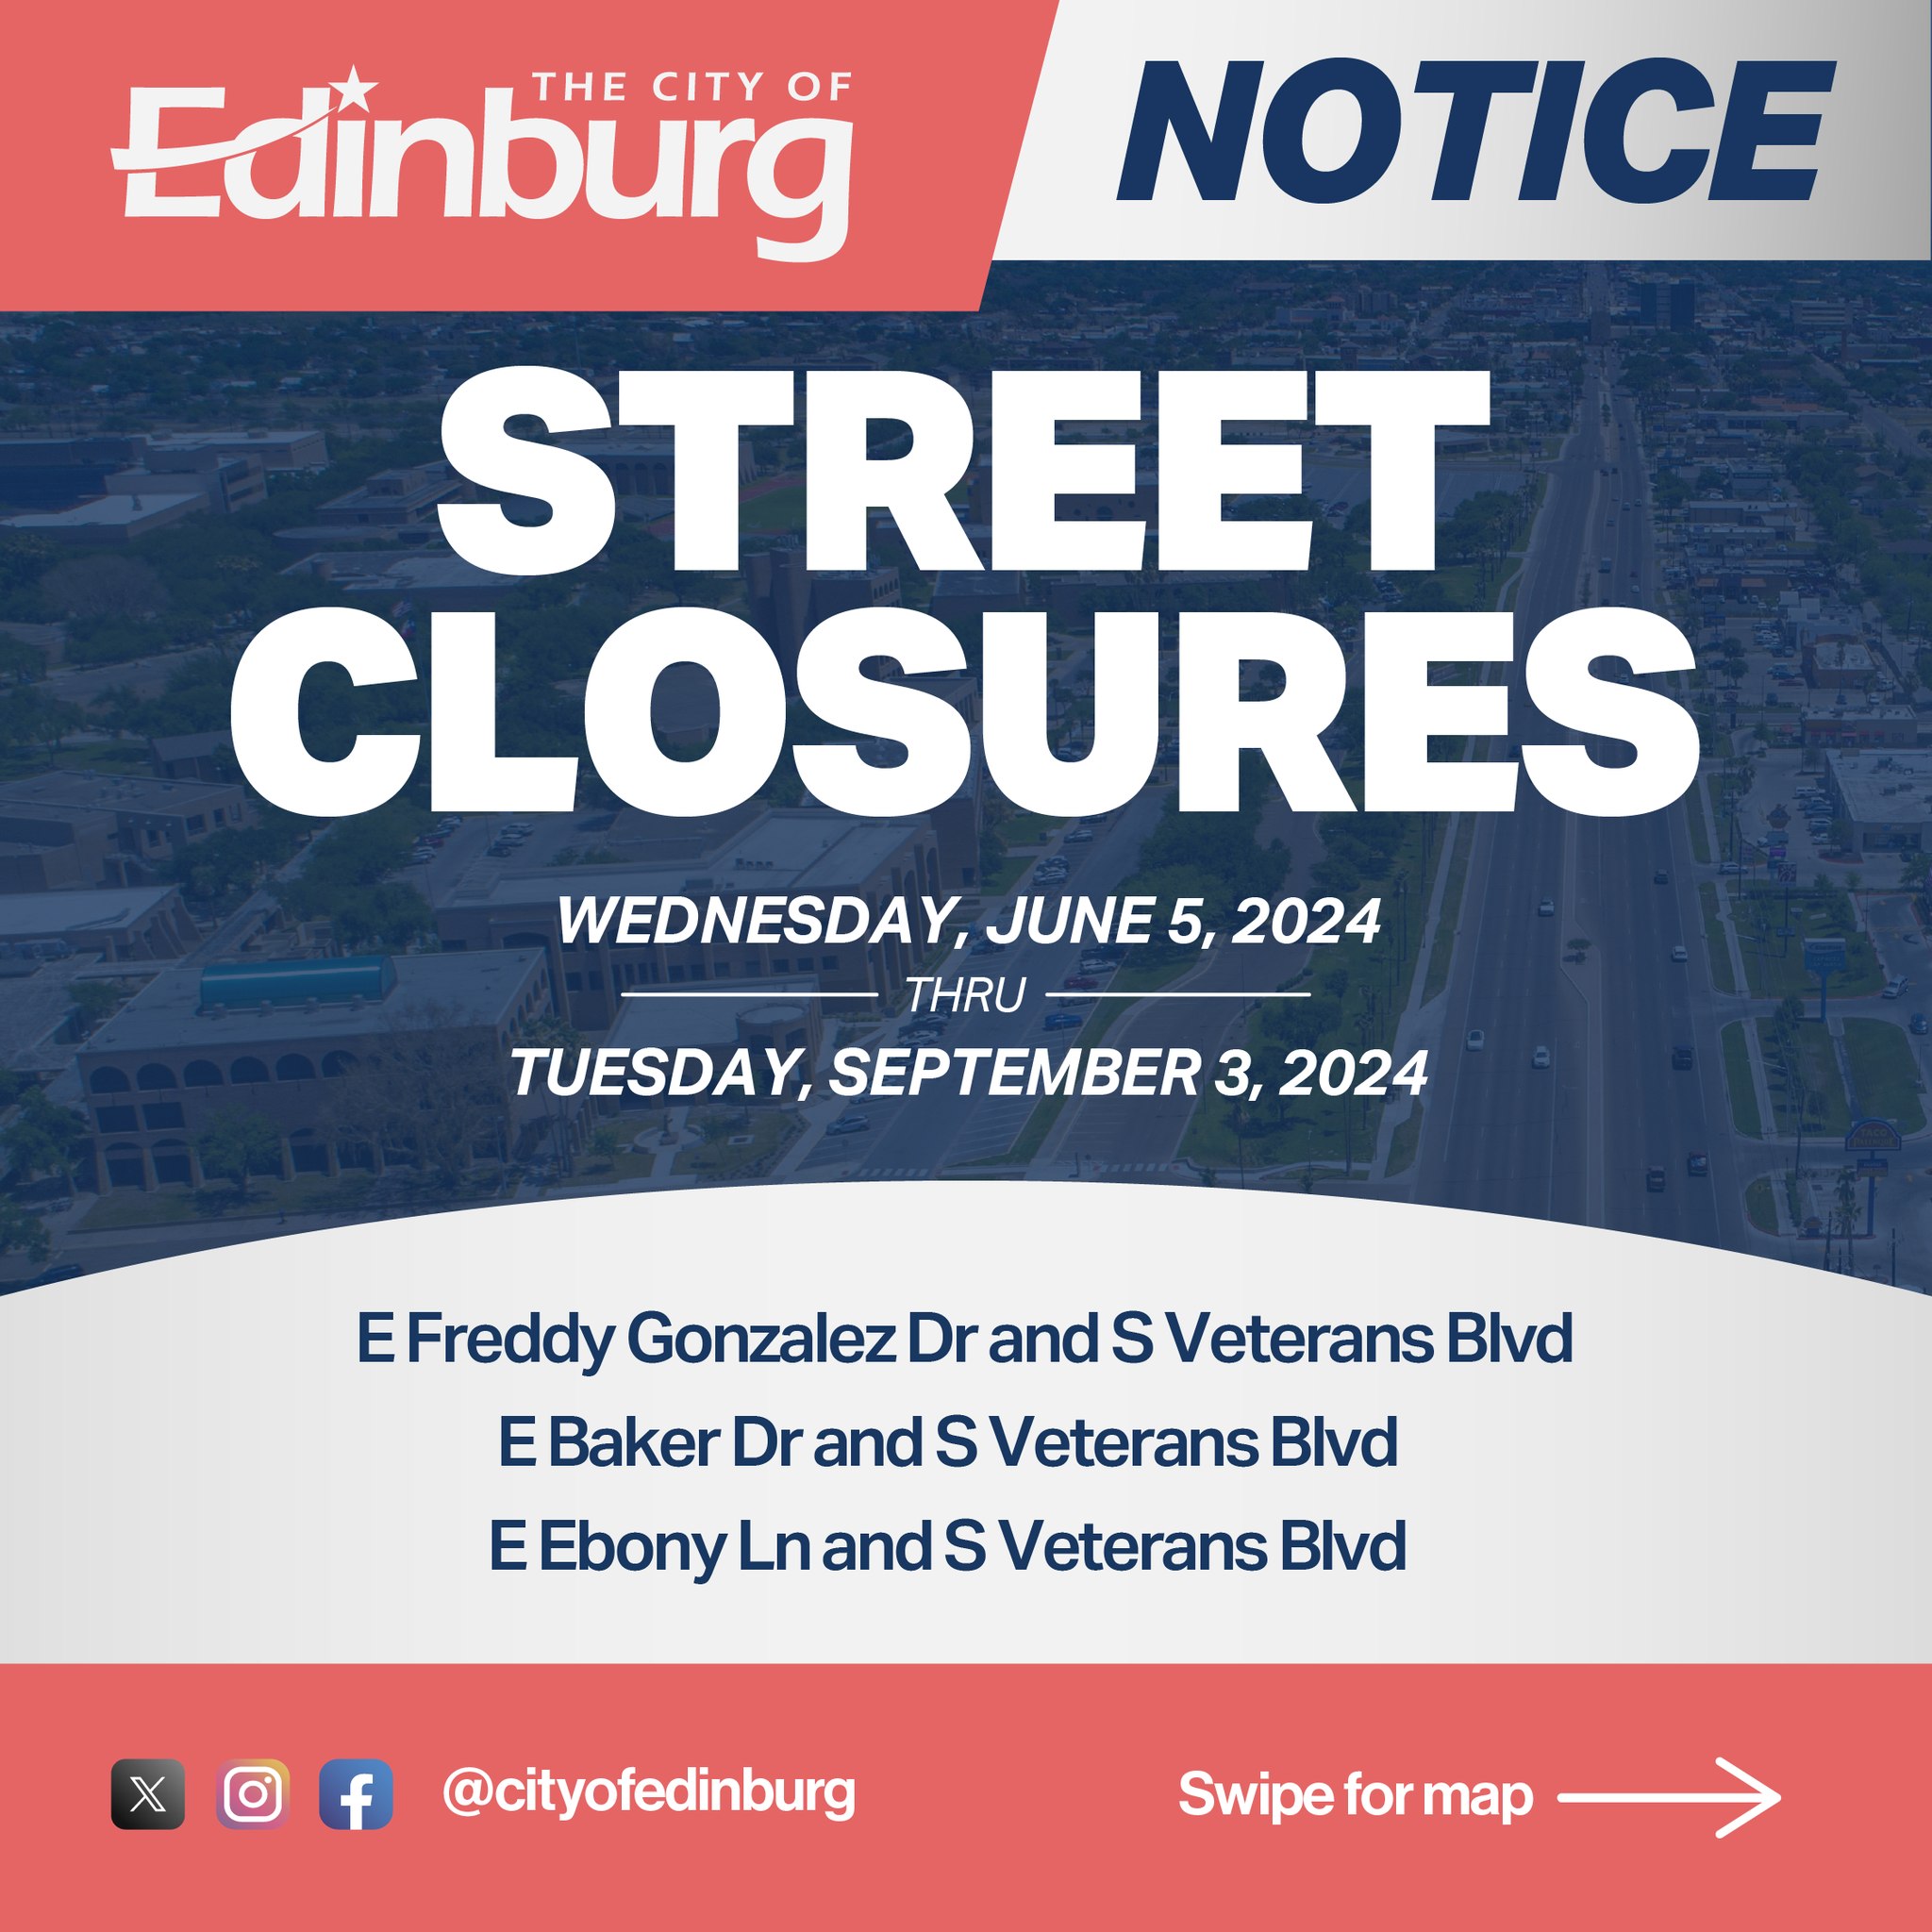 Upcoming Edinburg Street Closures